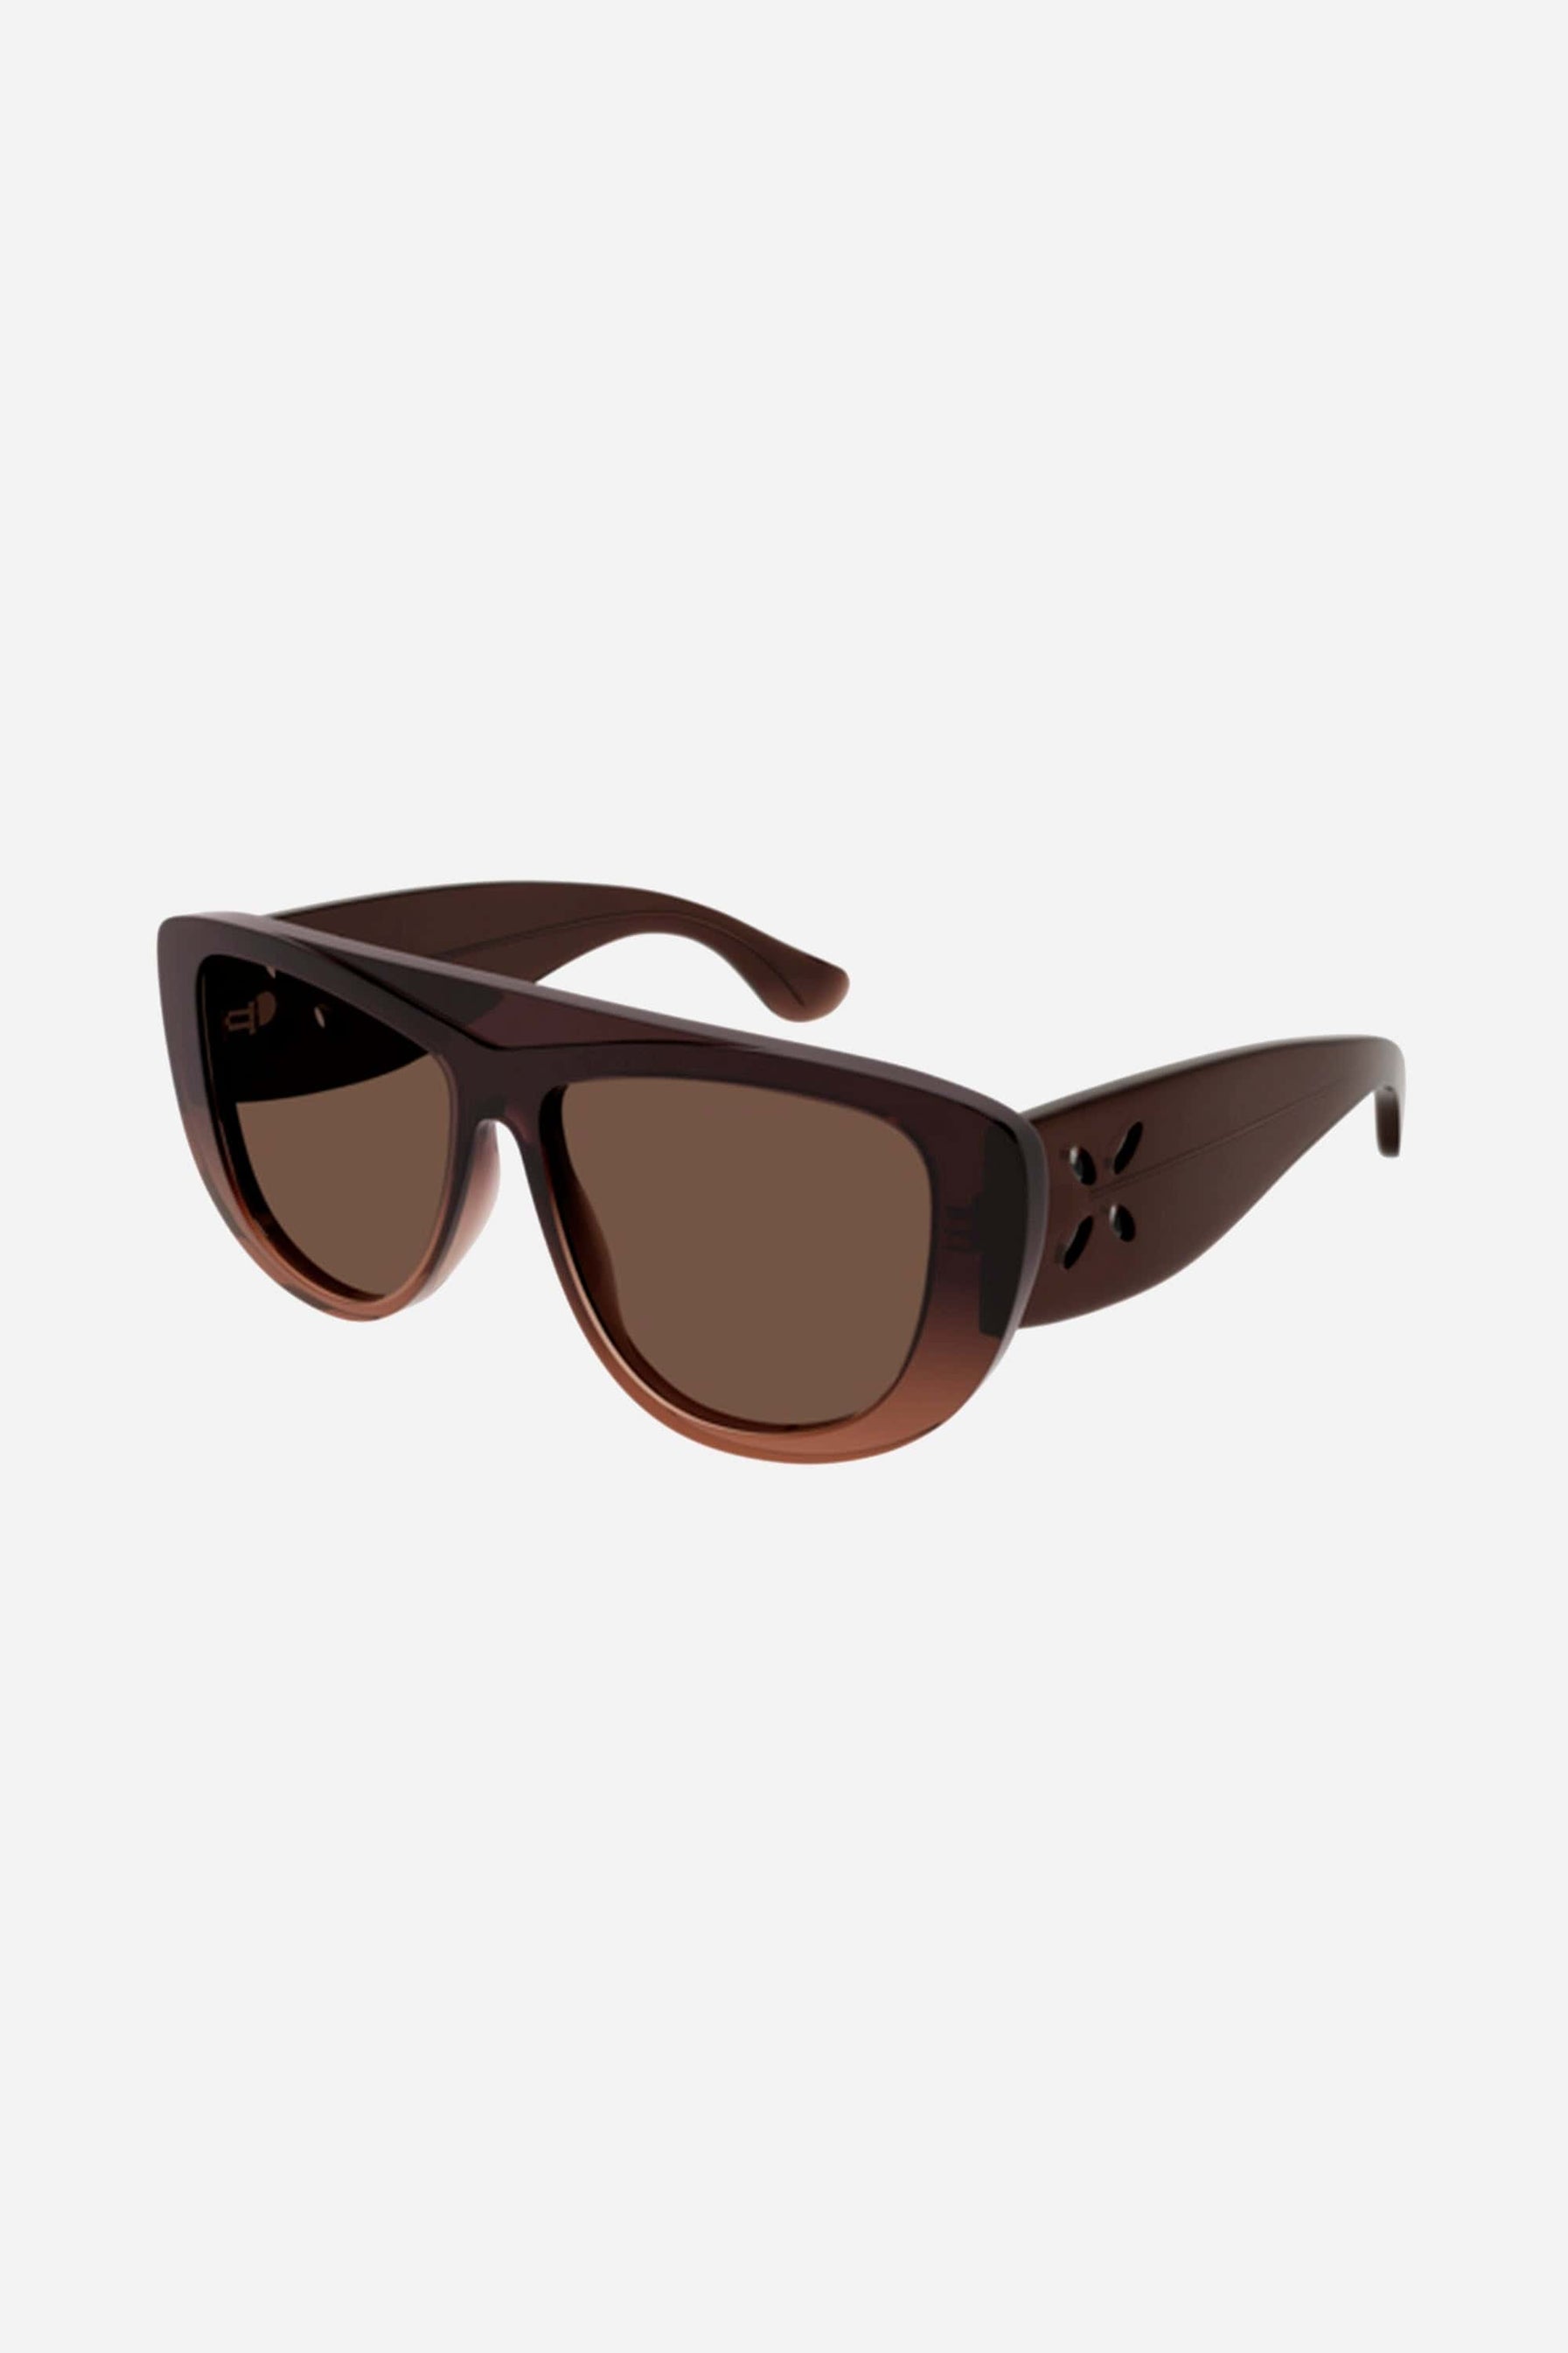 Alaia havana flat top brown sunglasses - Eyewear Club